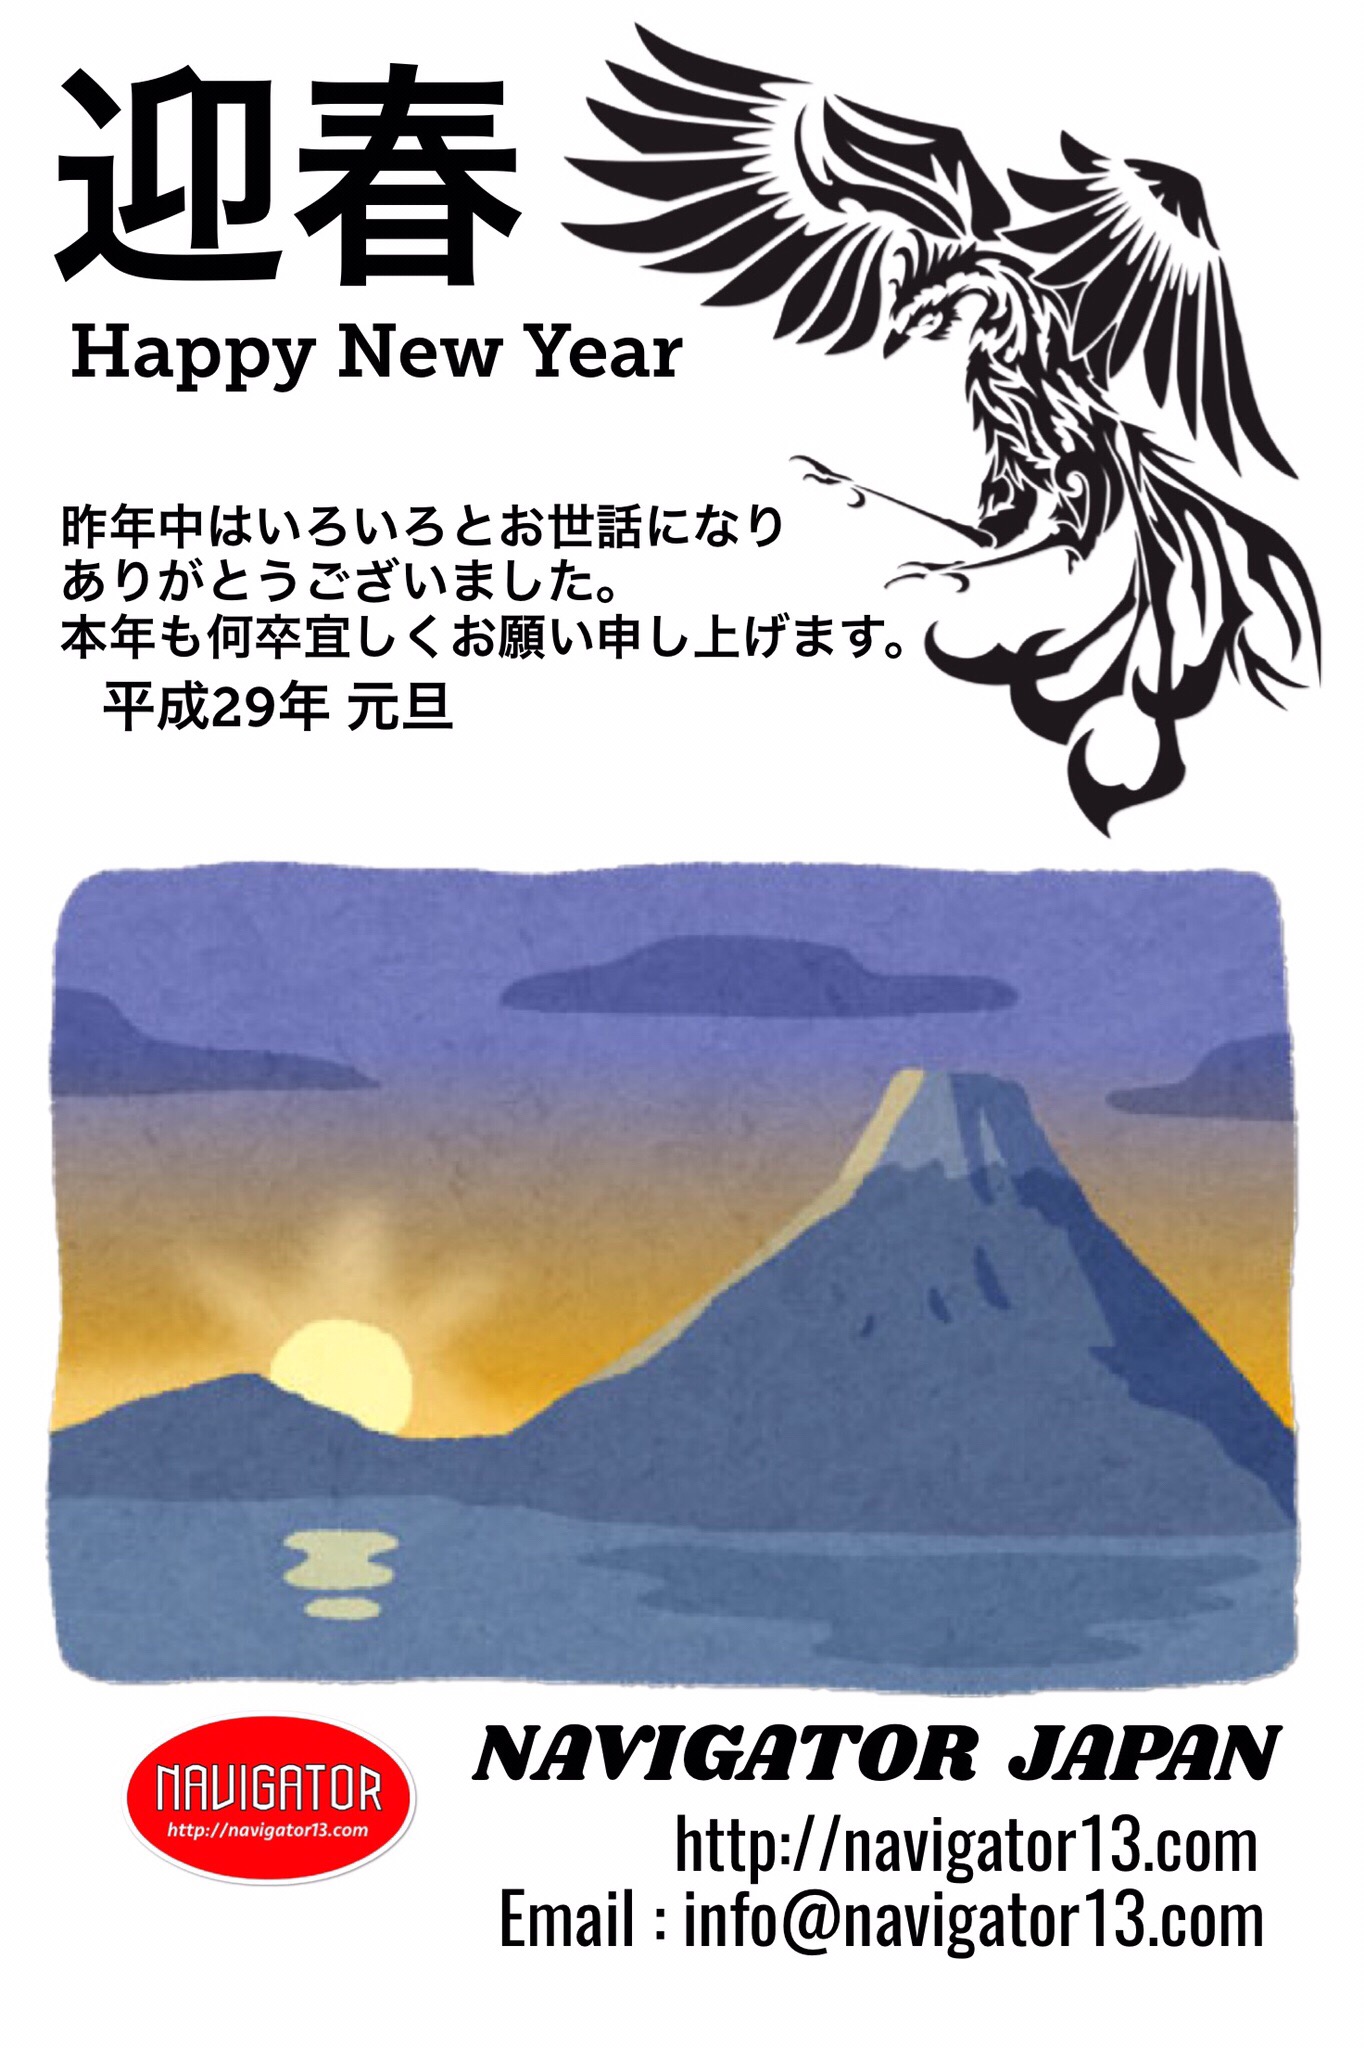 Navigator Japan New Year Post Card